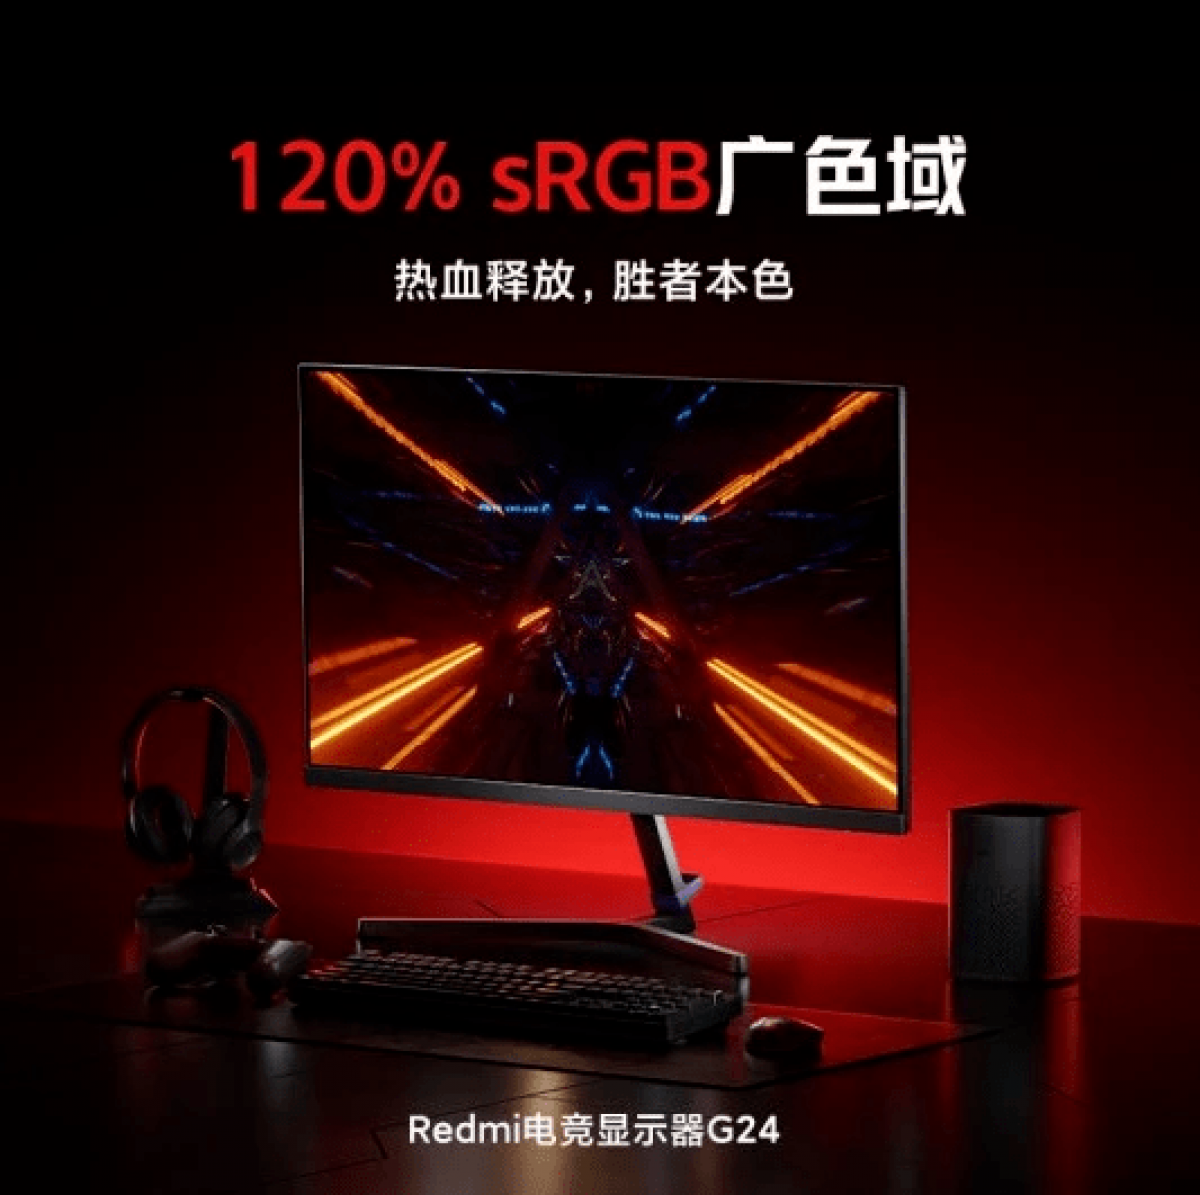 Redmi gaming g24 165hz. Игровой монитор Redmi g24. Игровой монитор Xiaomi Redmi g24 165 Hz. Игровой монитор Xiaomi Redmi g24 23.8 дюйма 165 Гц. Монитор Xiaomi Redmi display g24.